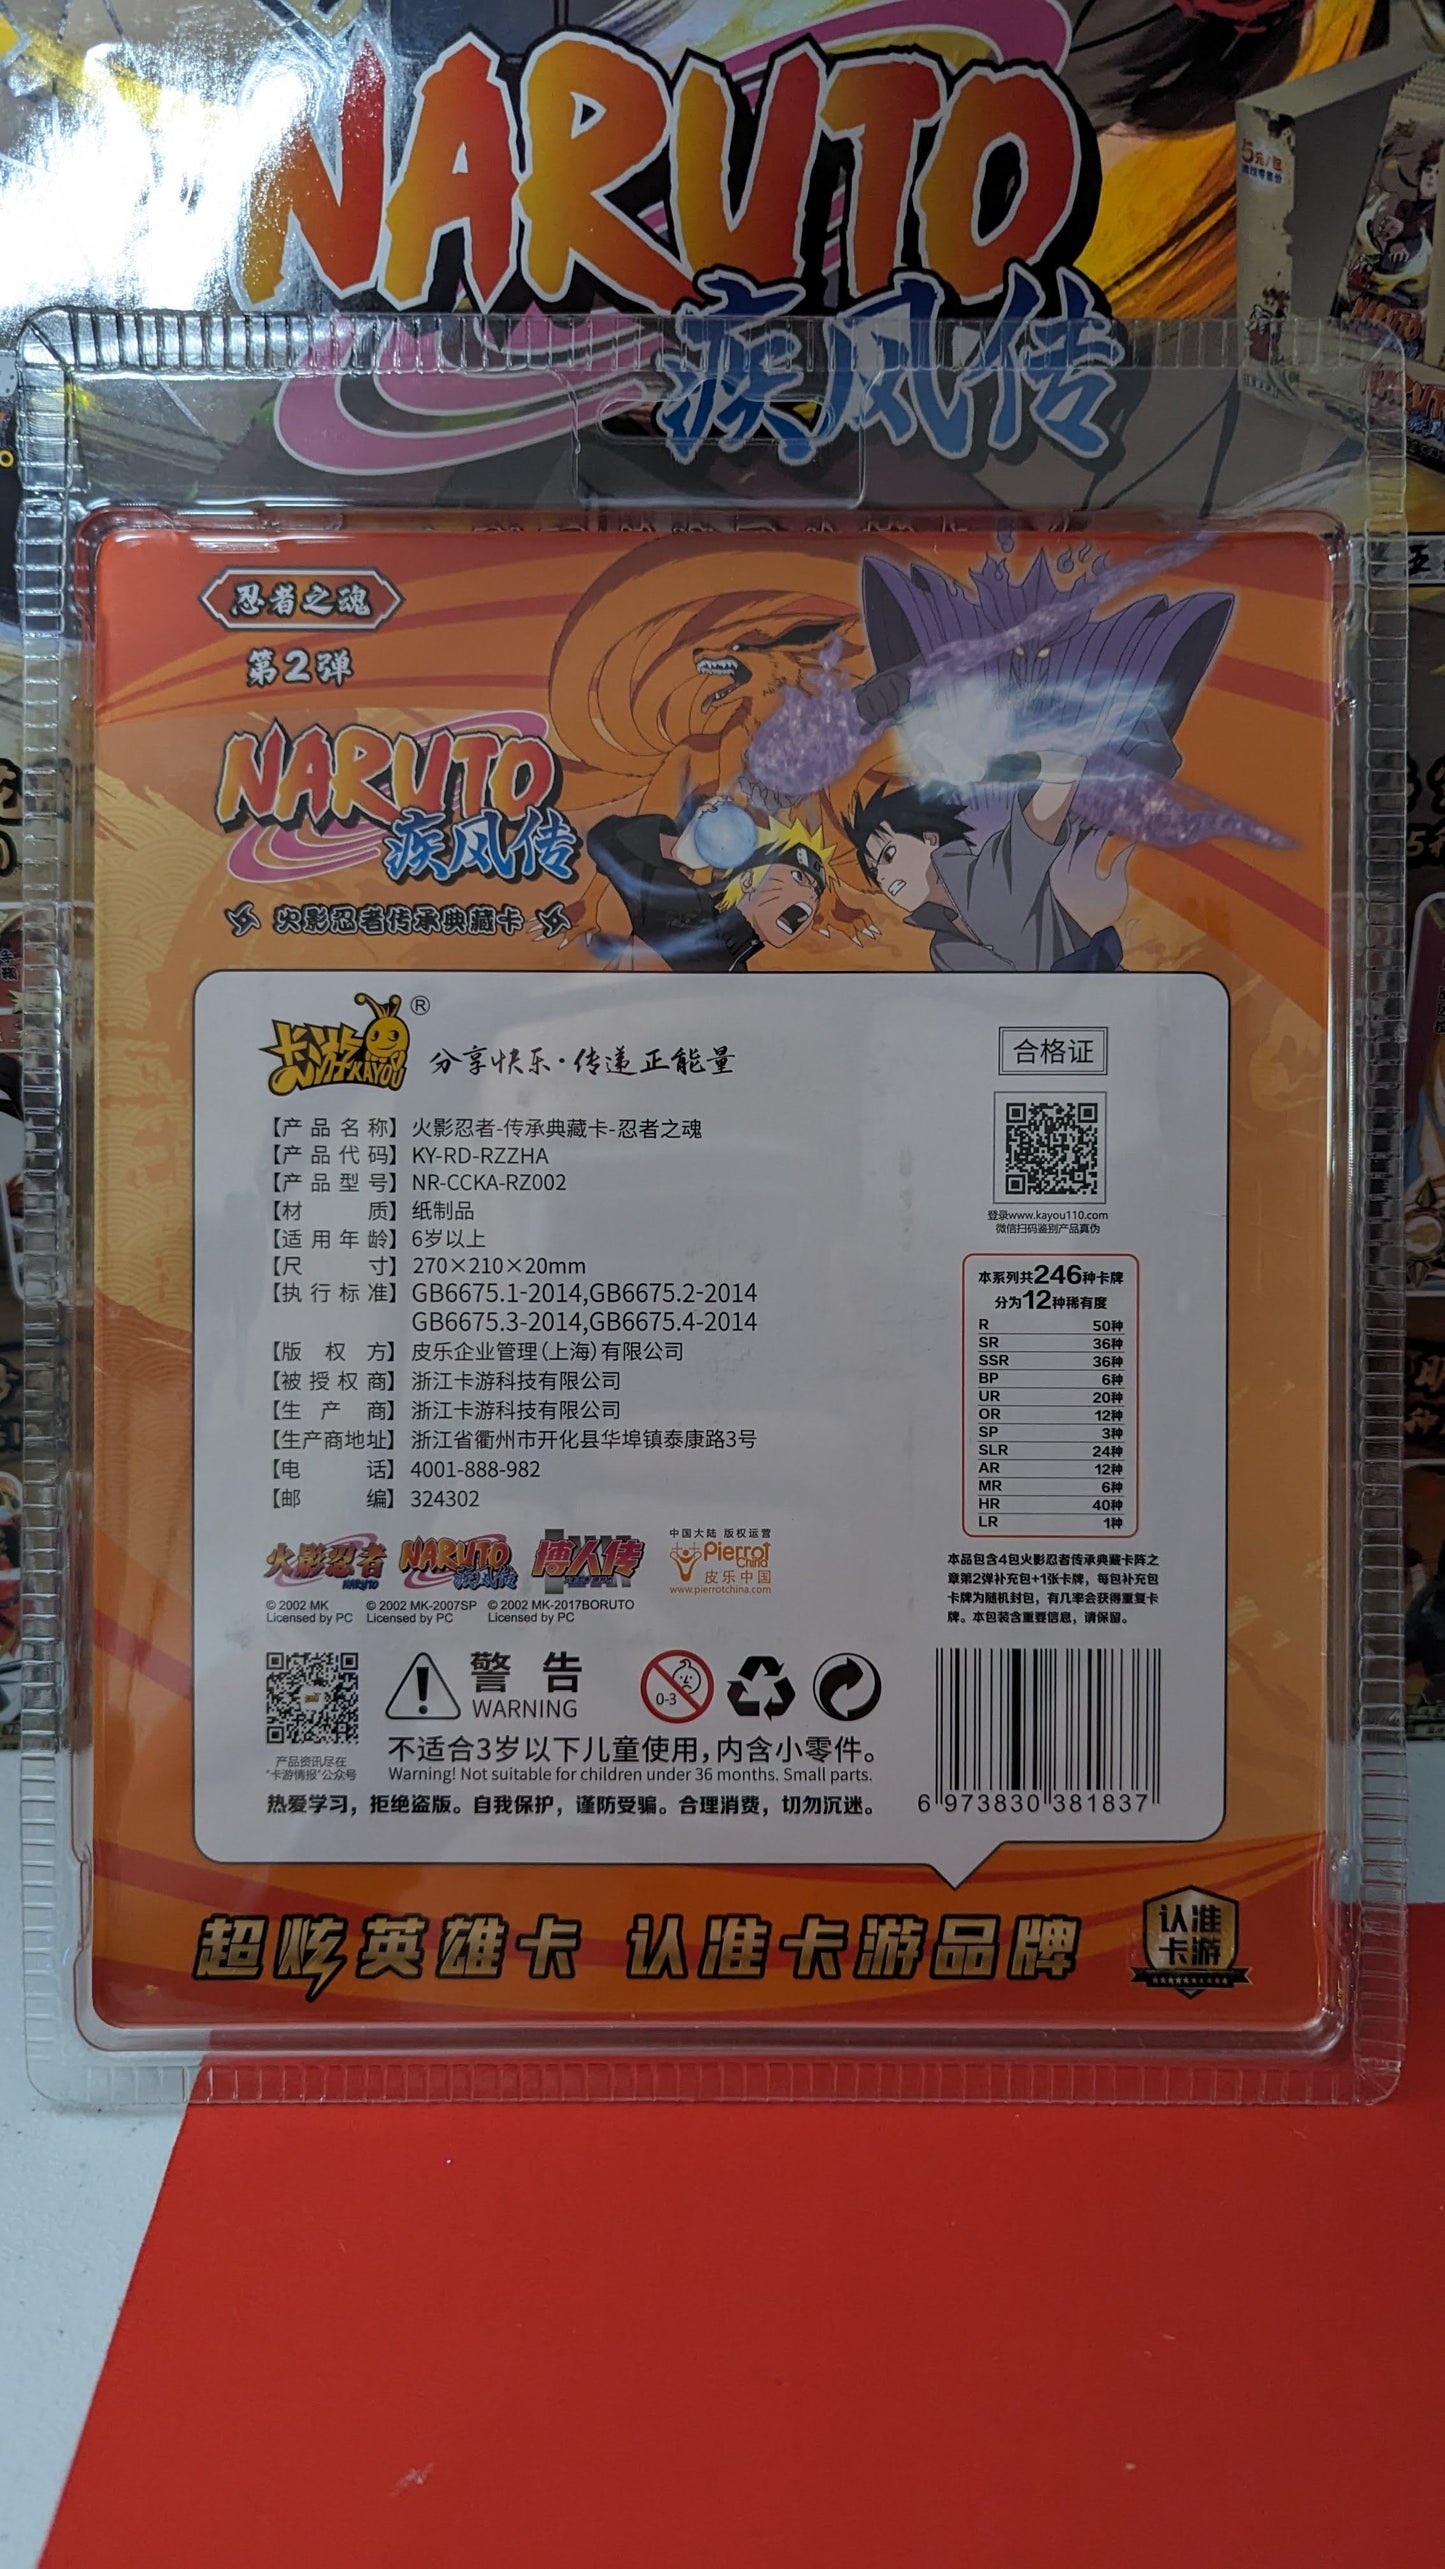 Kayou Official - T4-W2 Blister Pack - 4 packs